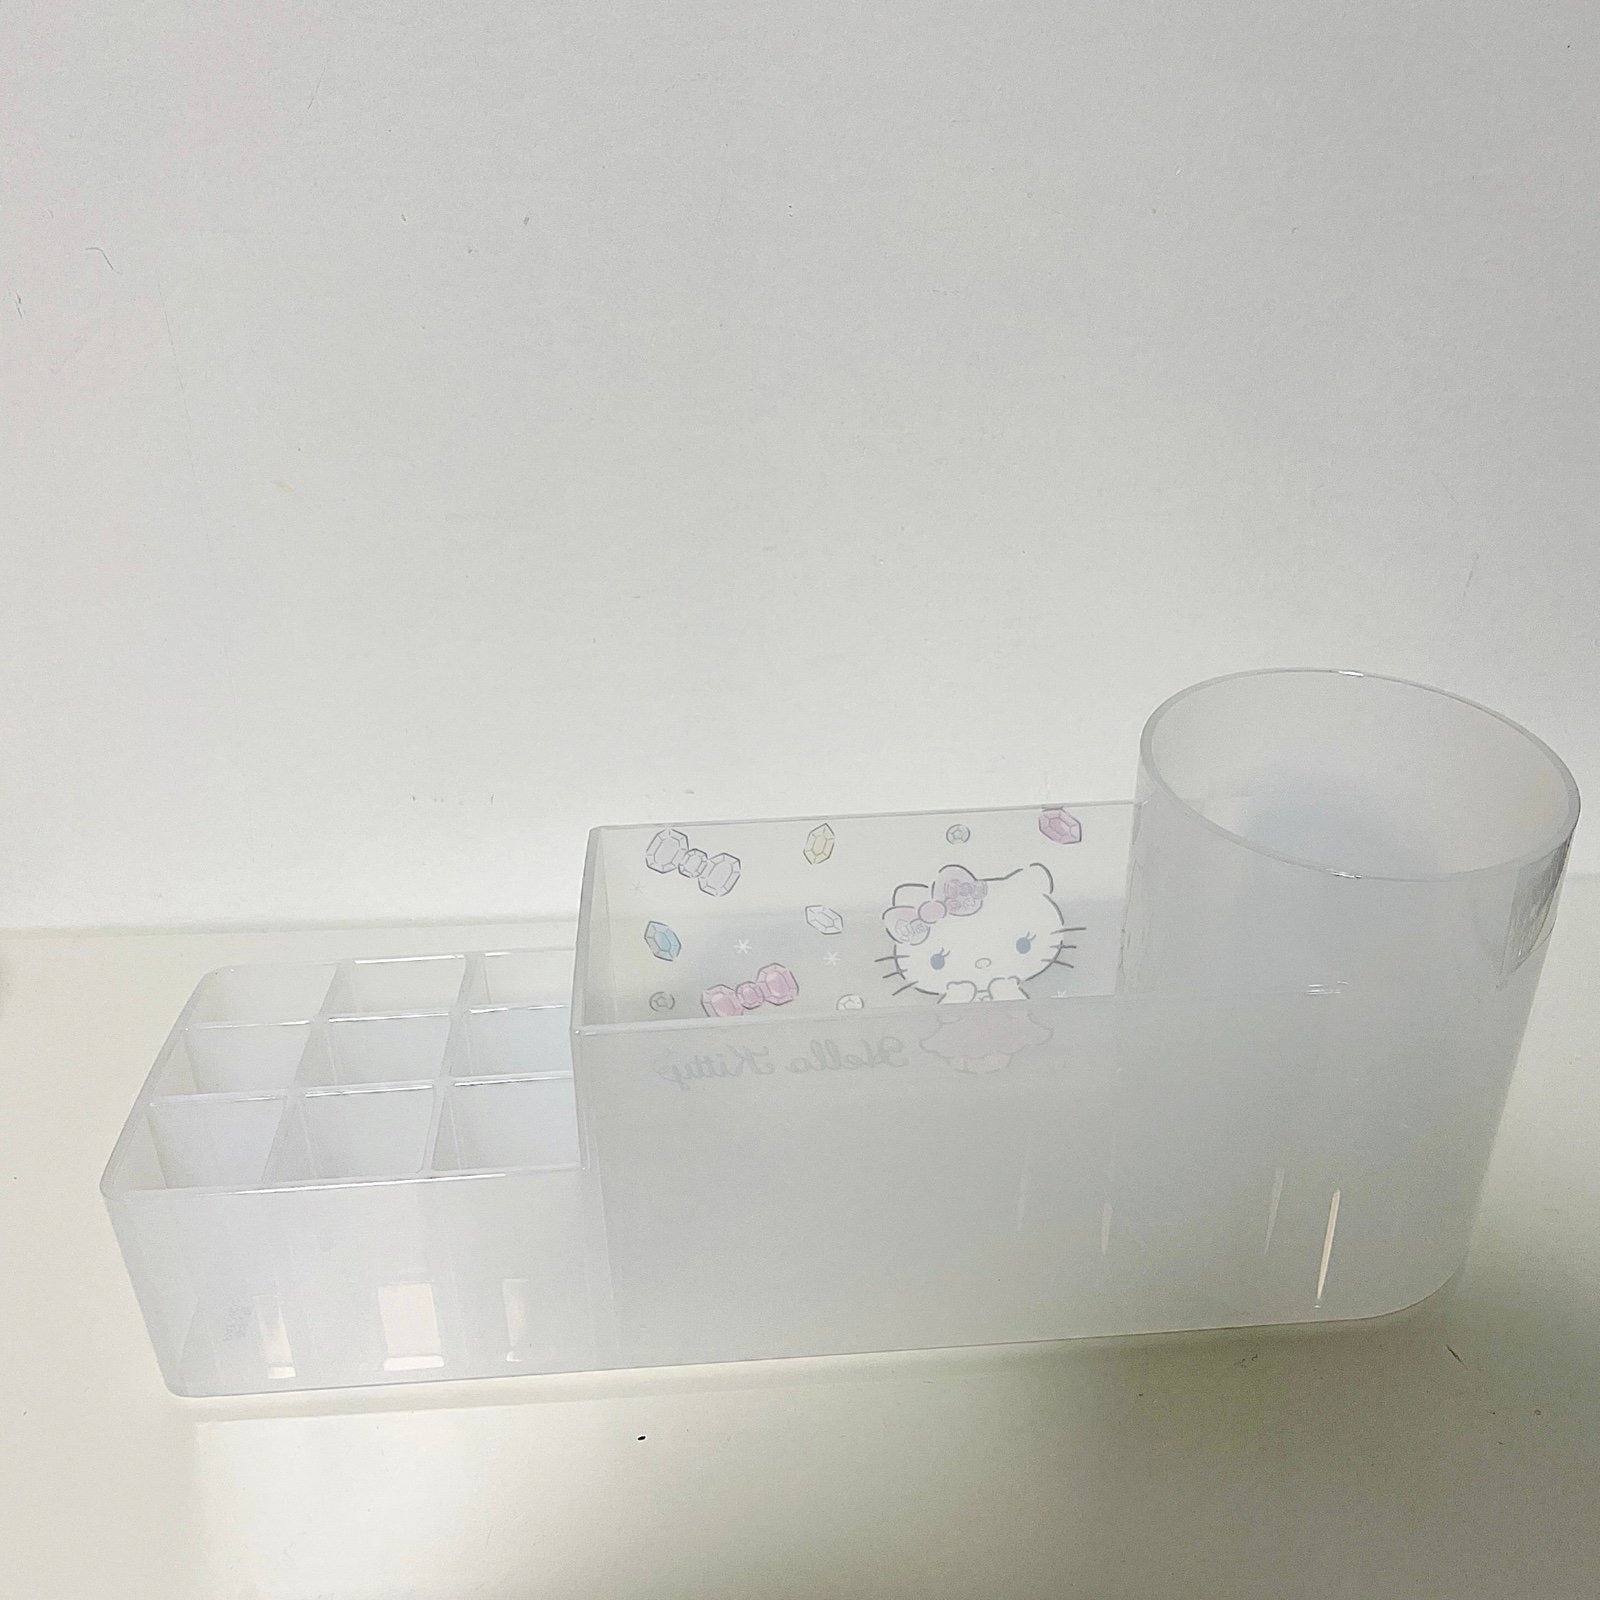 Sanrio Hello Kitty cosmetics storage box/ organizer cqWYlgSJU